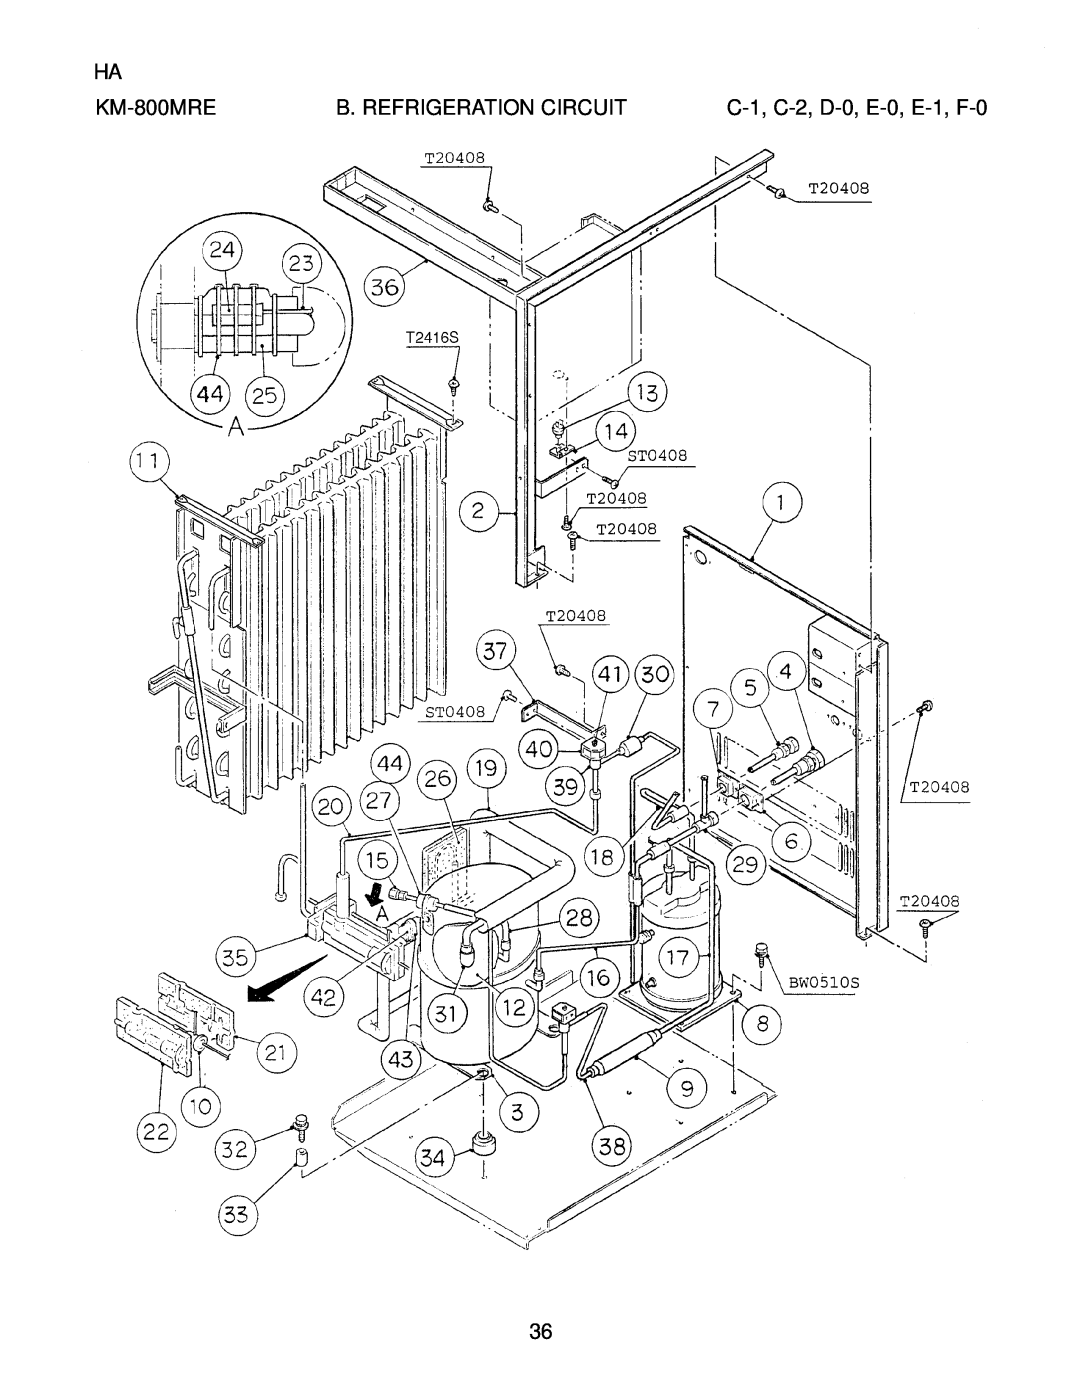 Hoshizaki KM-800MWE, KM-800MAE manual C-1, C-2, D-0, E-0, E-1, F-0, KM-800MRE, B. Refrigeration Circuit 